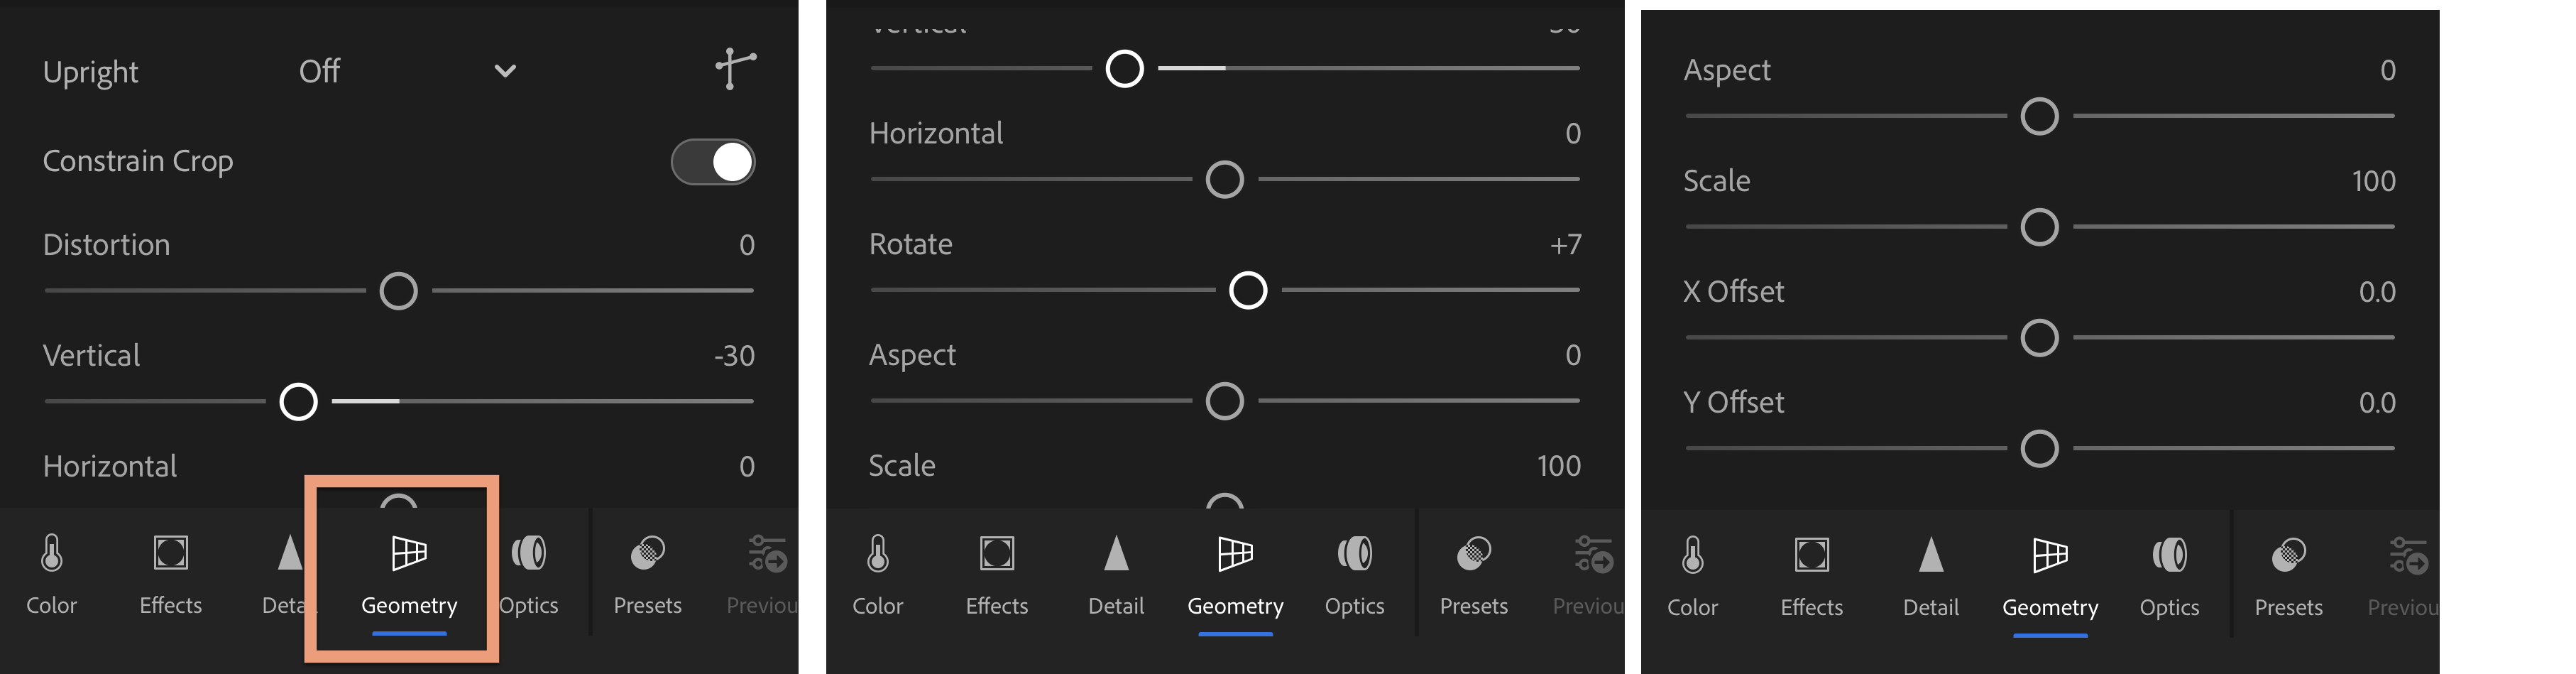 Lightroom CC iOS Geometry Editing Options